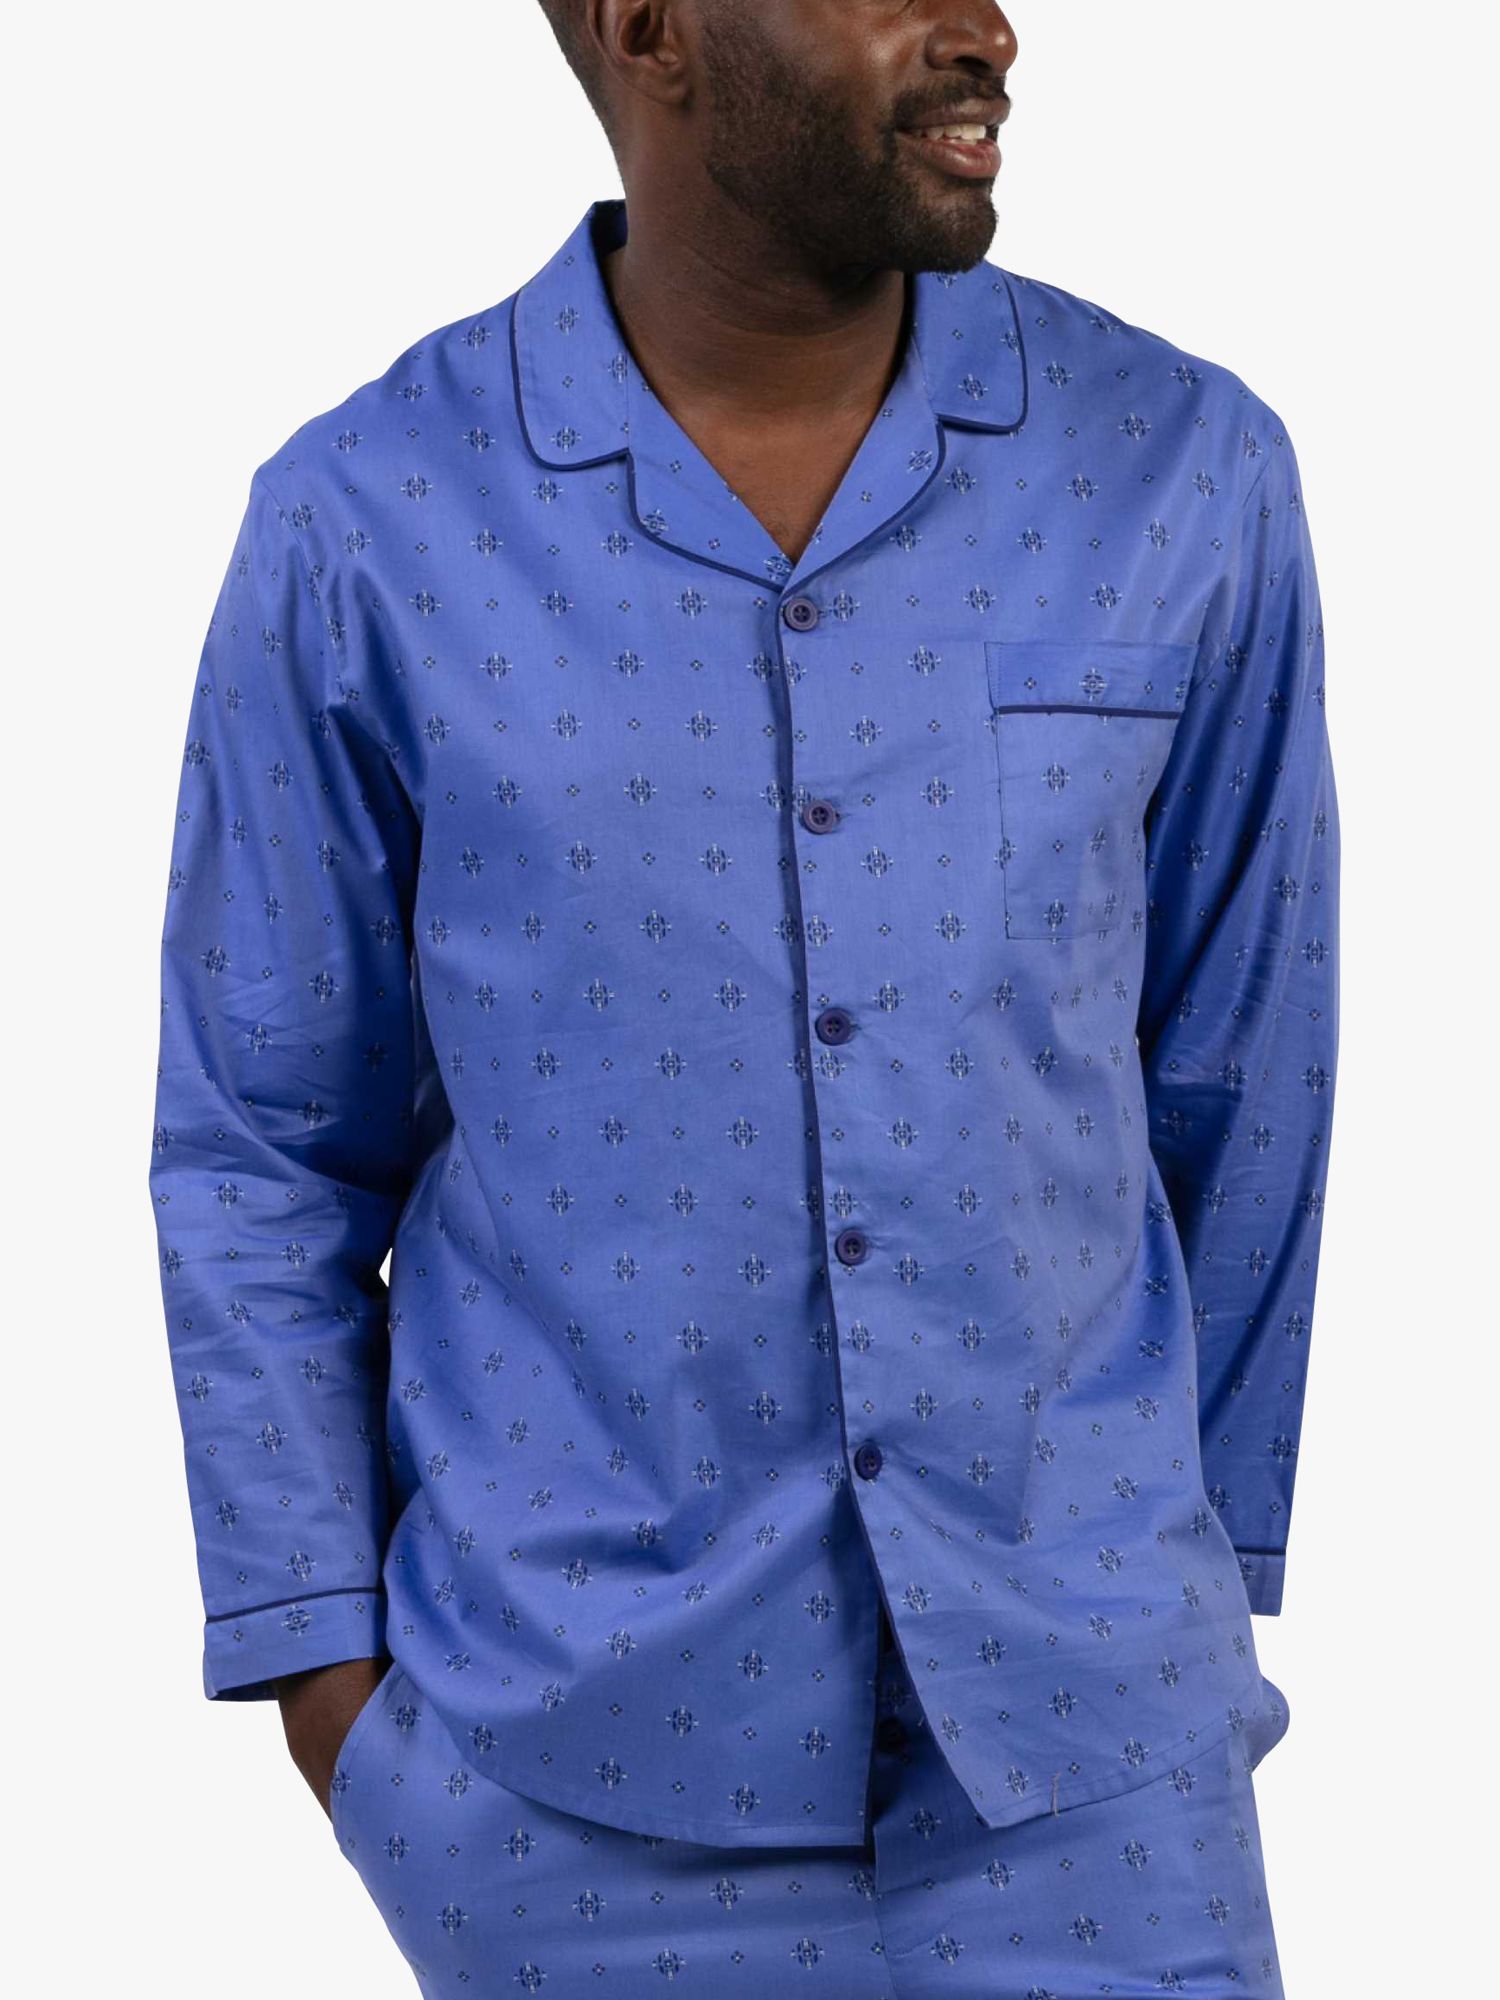 John Lewis Organic Cotton Poplin Stripe Pyjama Bottoms, Blue